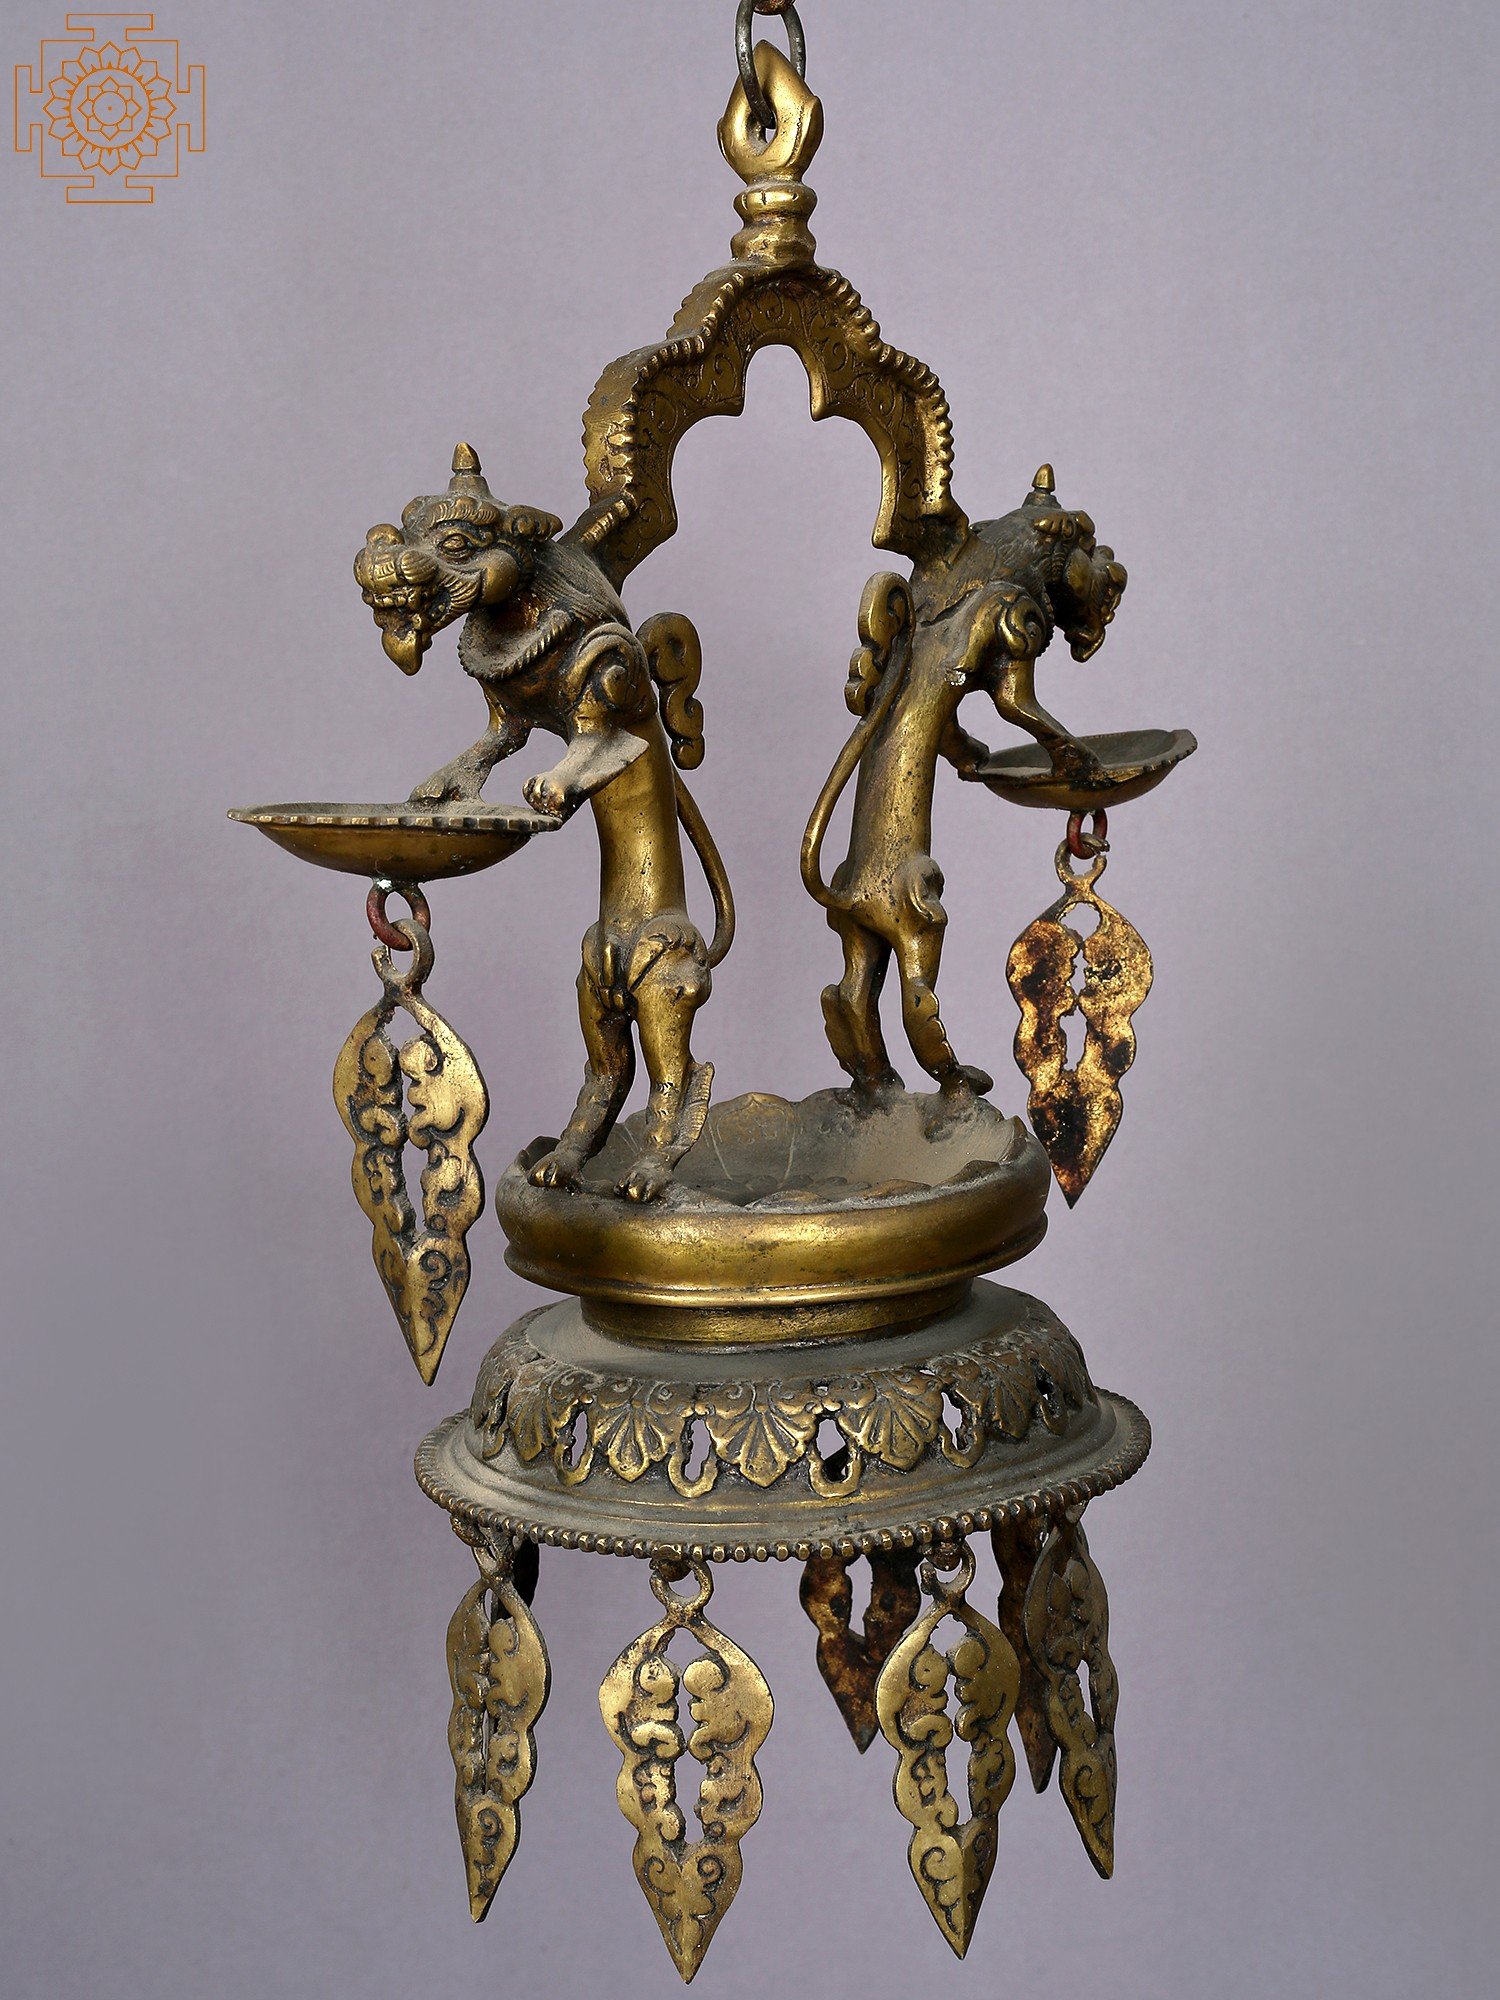 12 Small Hanging Brass Stupa Oil Lamp from Nepal